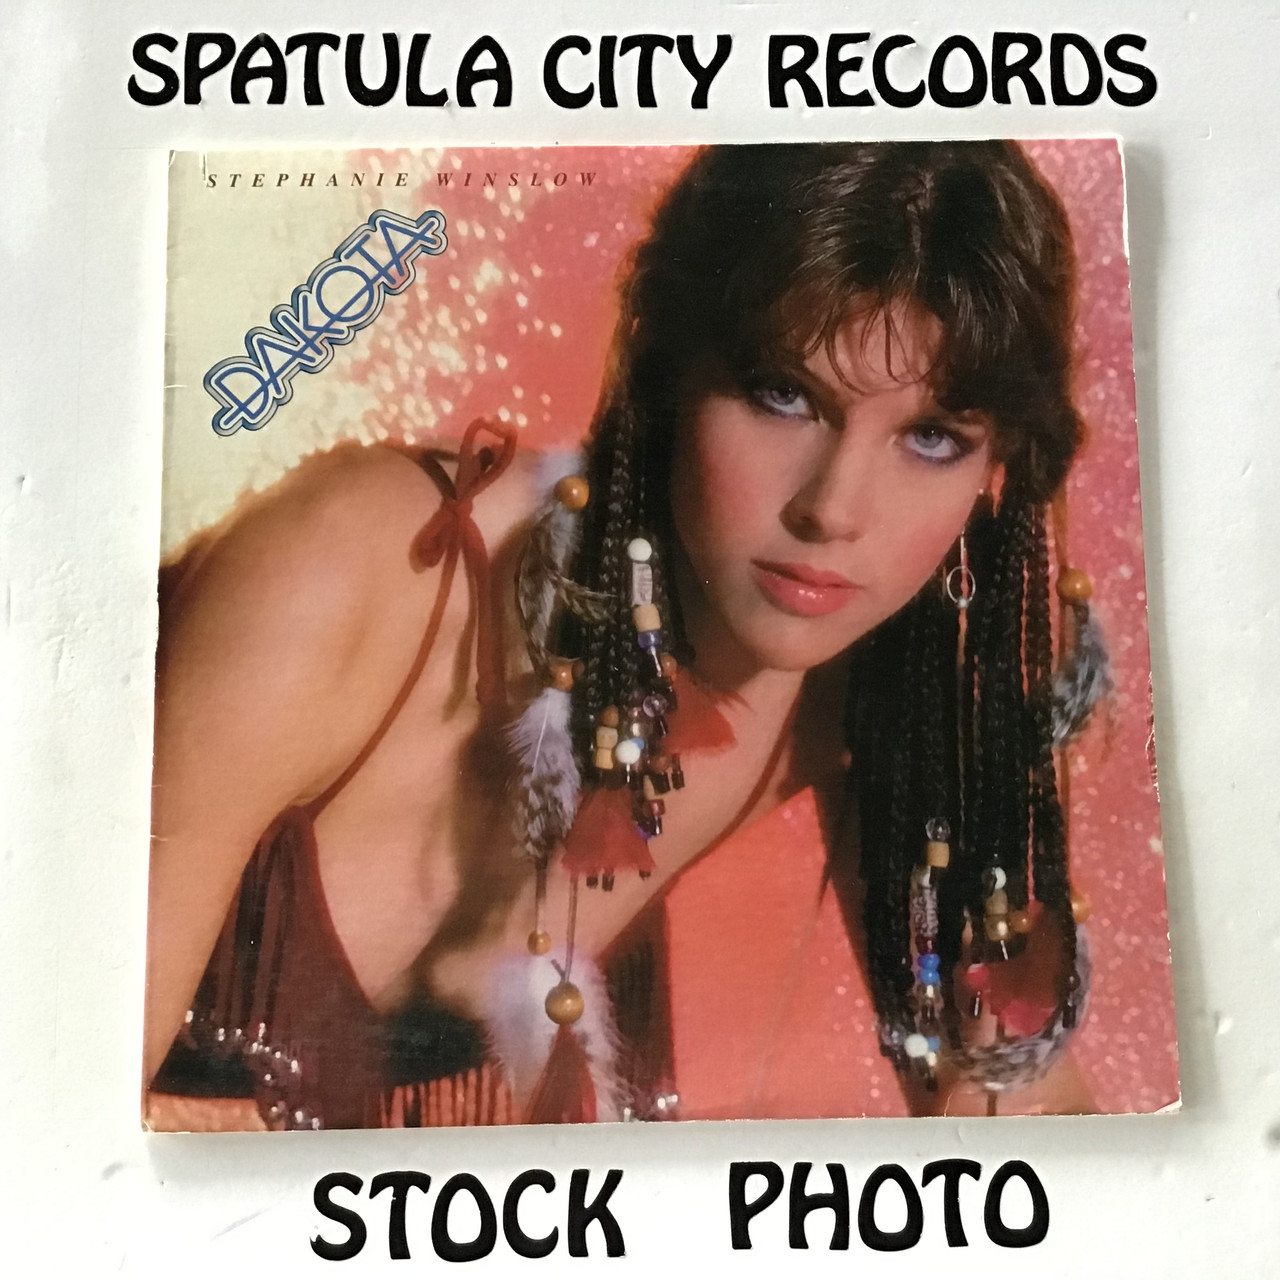 Stephanie Winslow - Dakota - vinyl record album LP